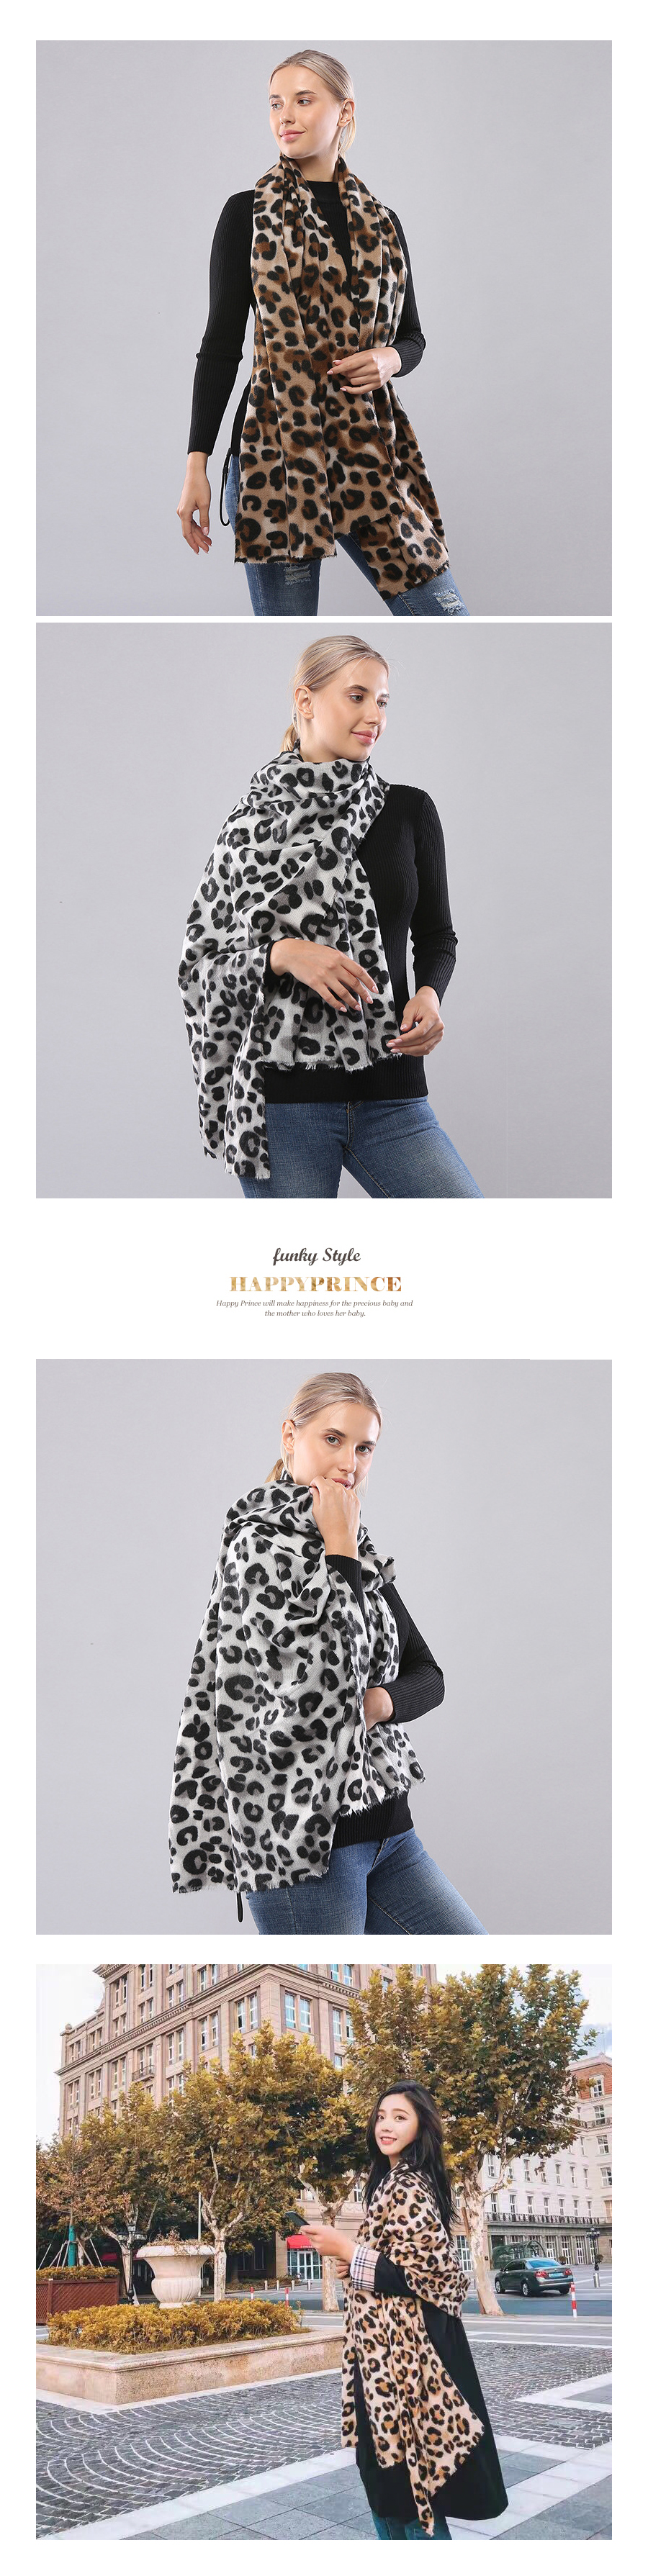 Fashion Leopard-3 Leopard Print Scarf,Thin Scaves